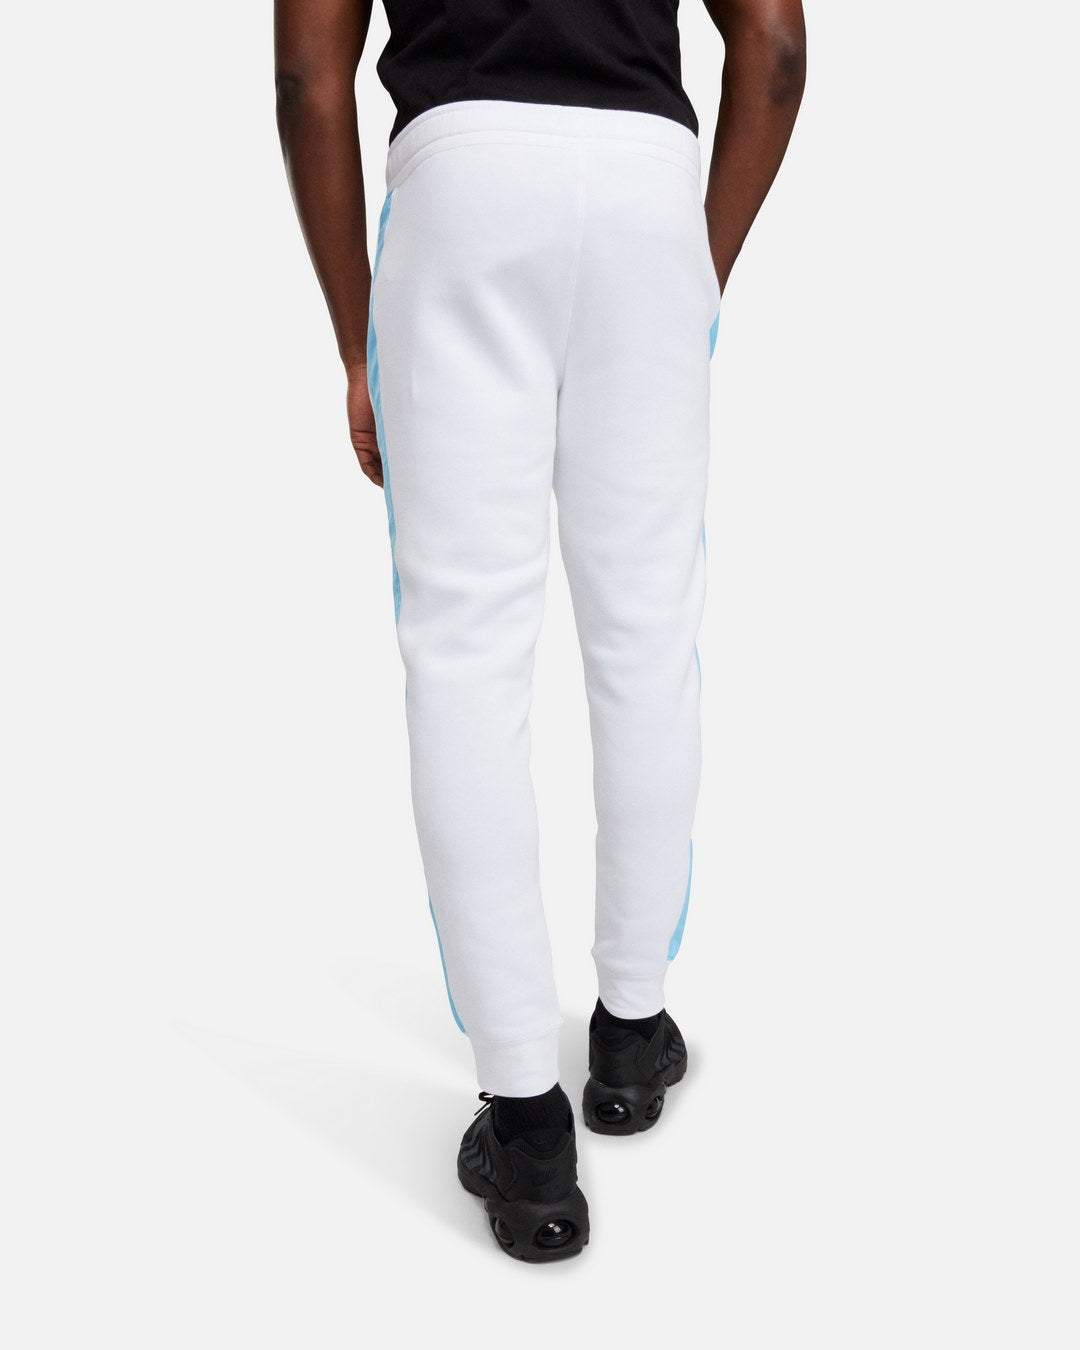 Nike Sportswear Pants - White/Blue